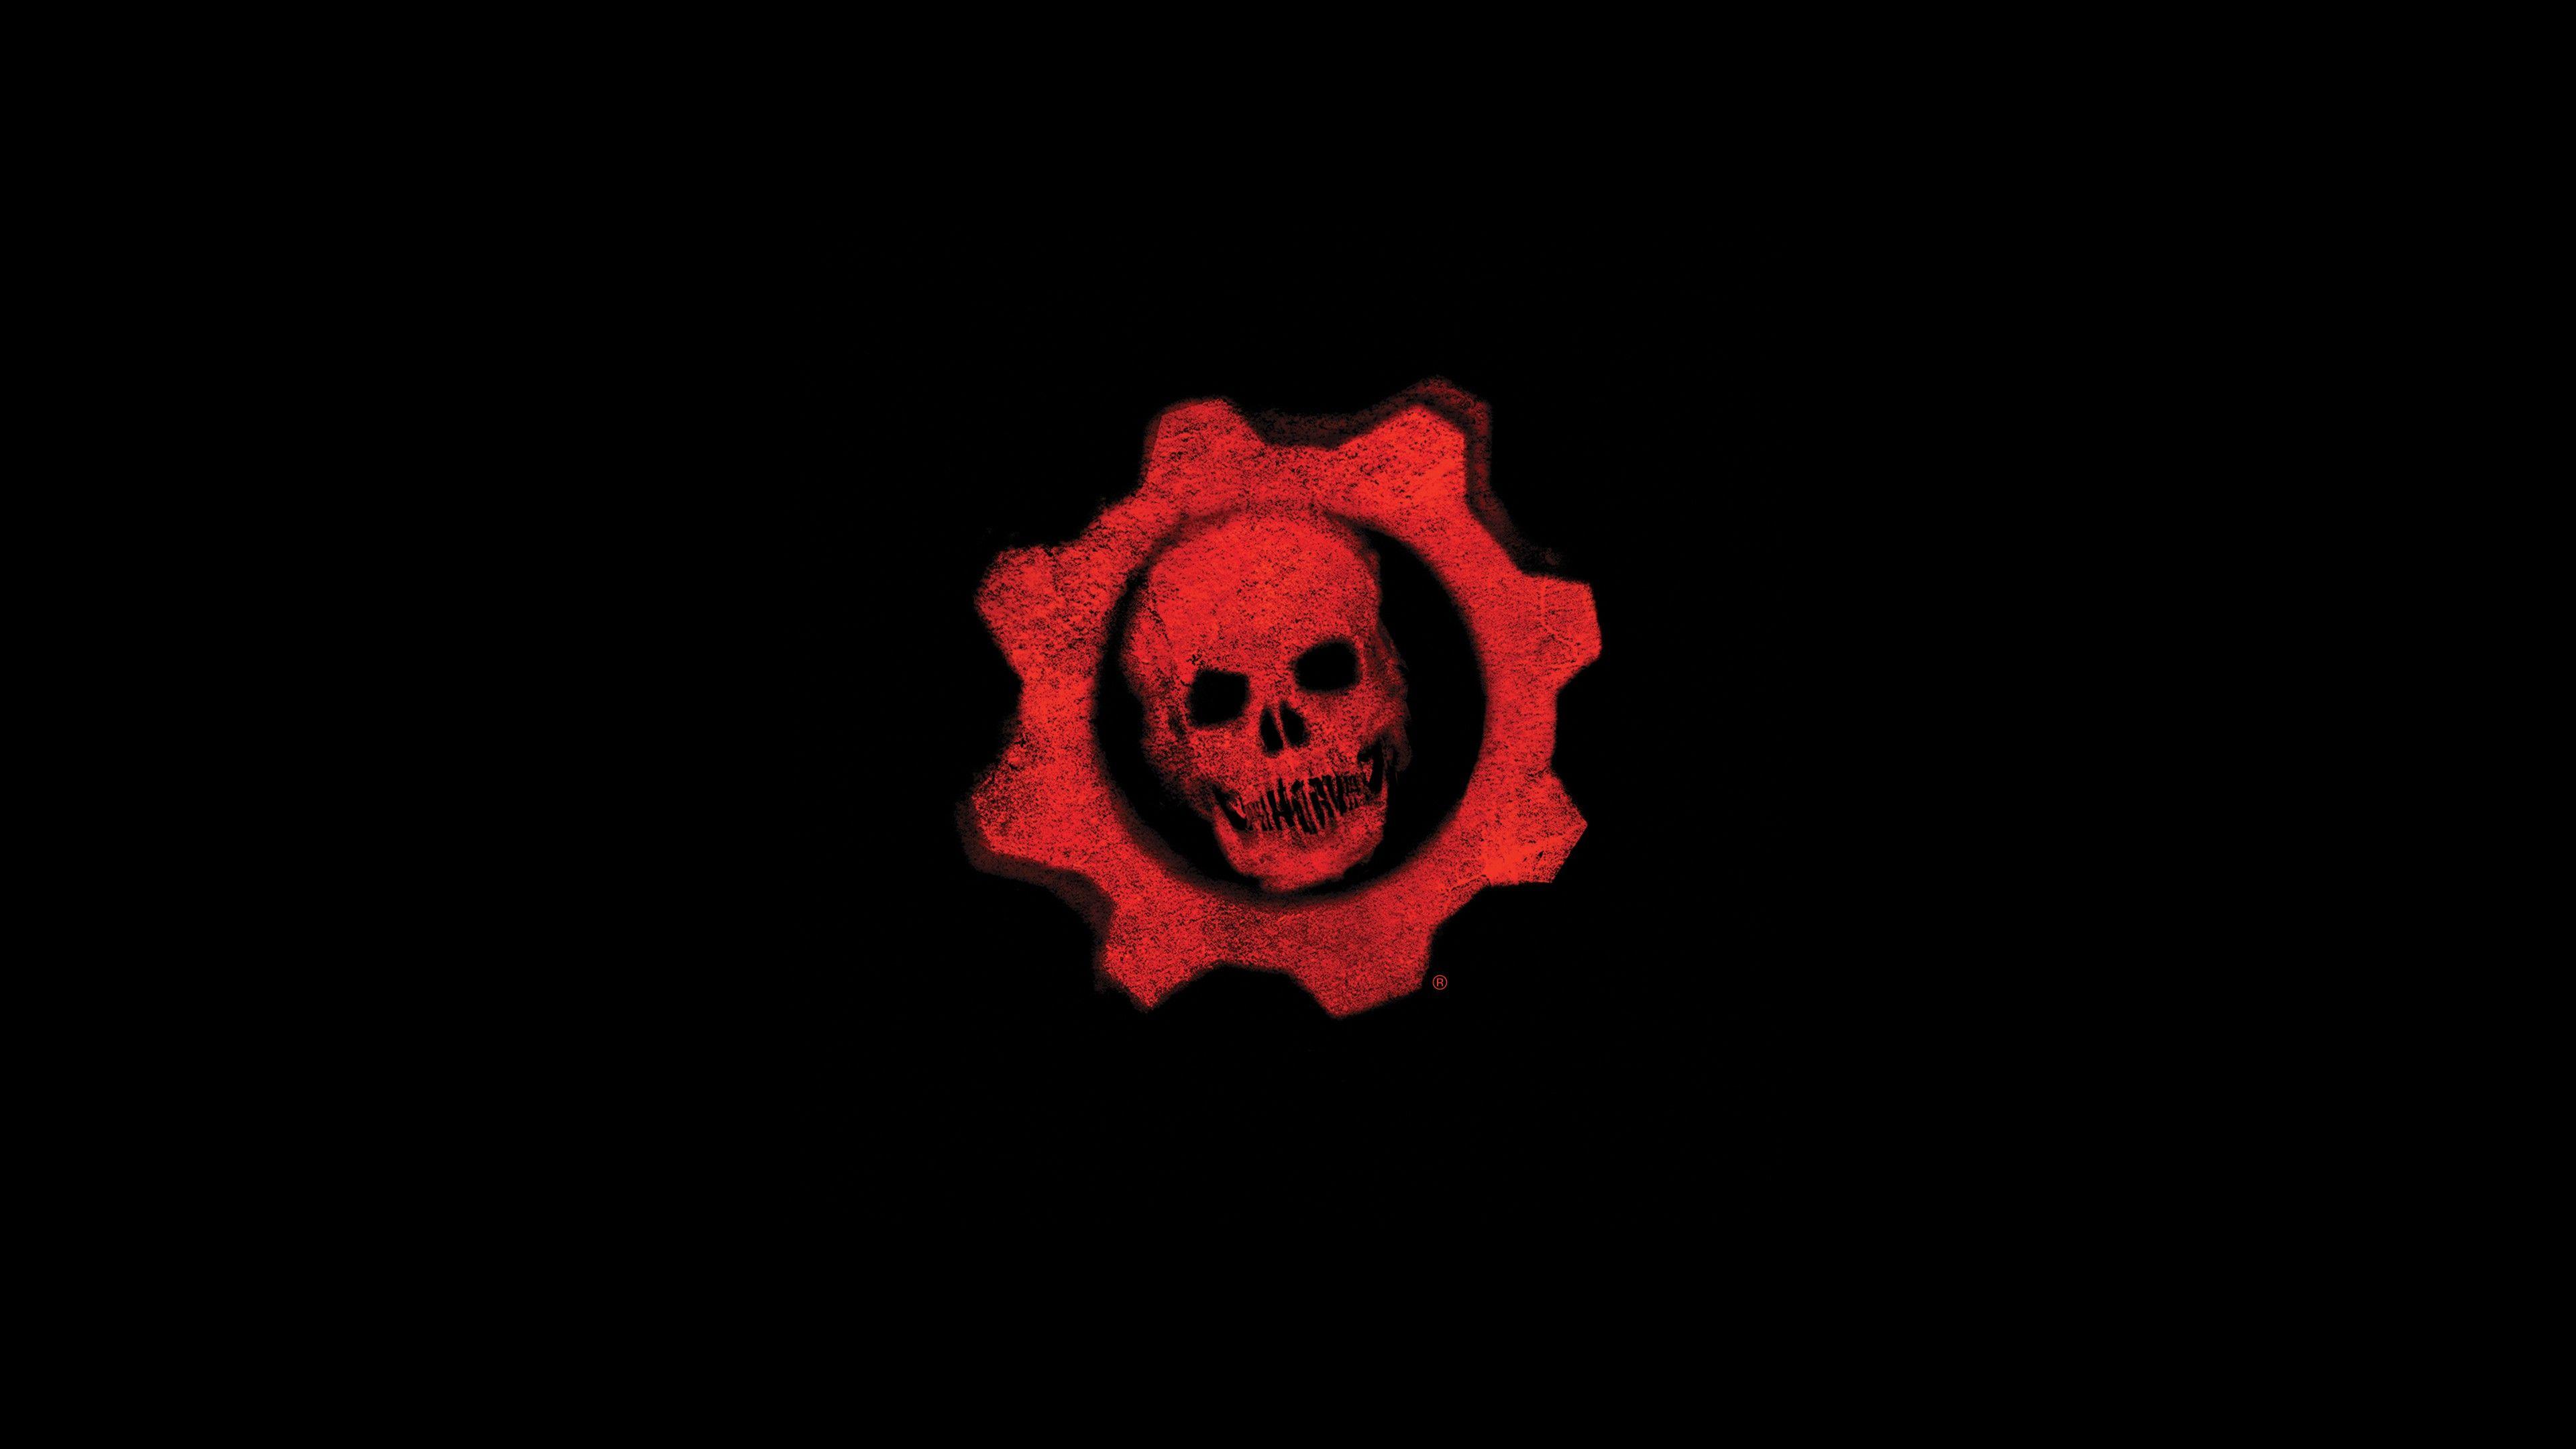 Gears of War Logo - Logo Gears Of War 4k, HD Games, 4k Wallpapers, Images, Backgrounds ...